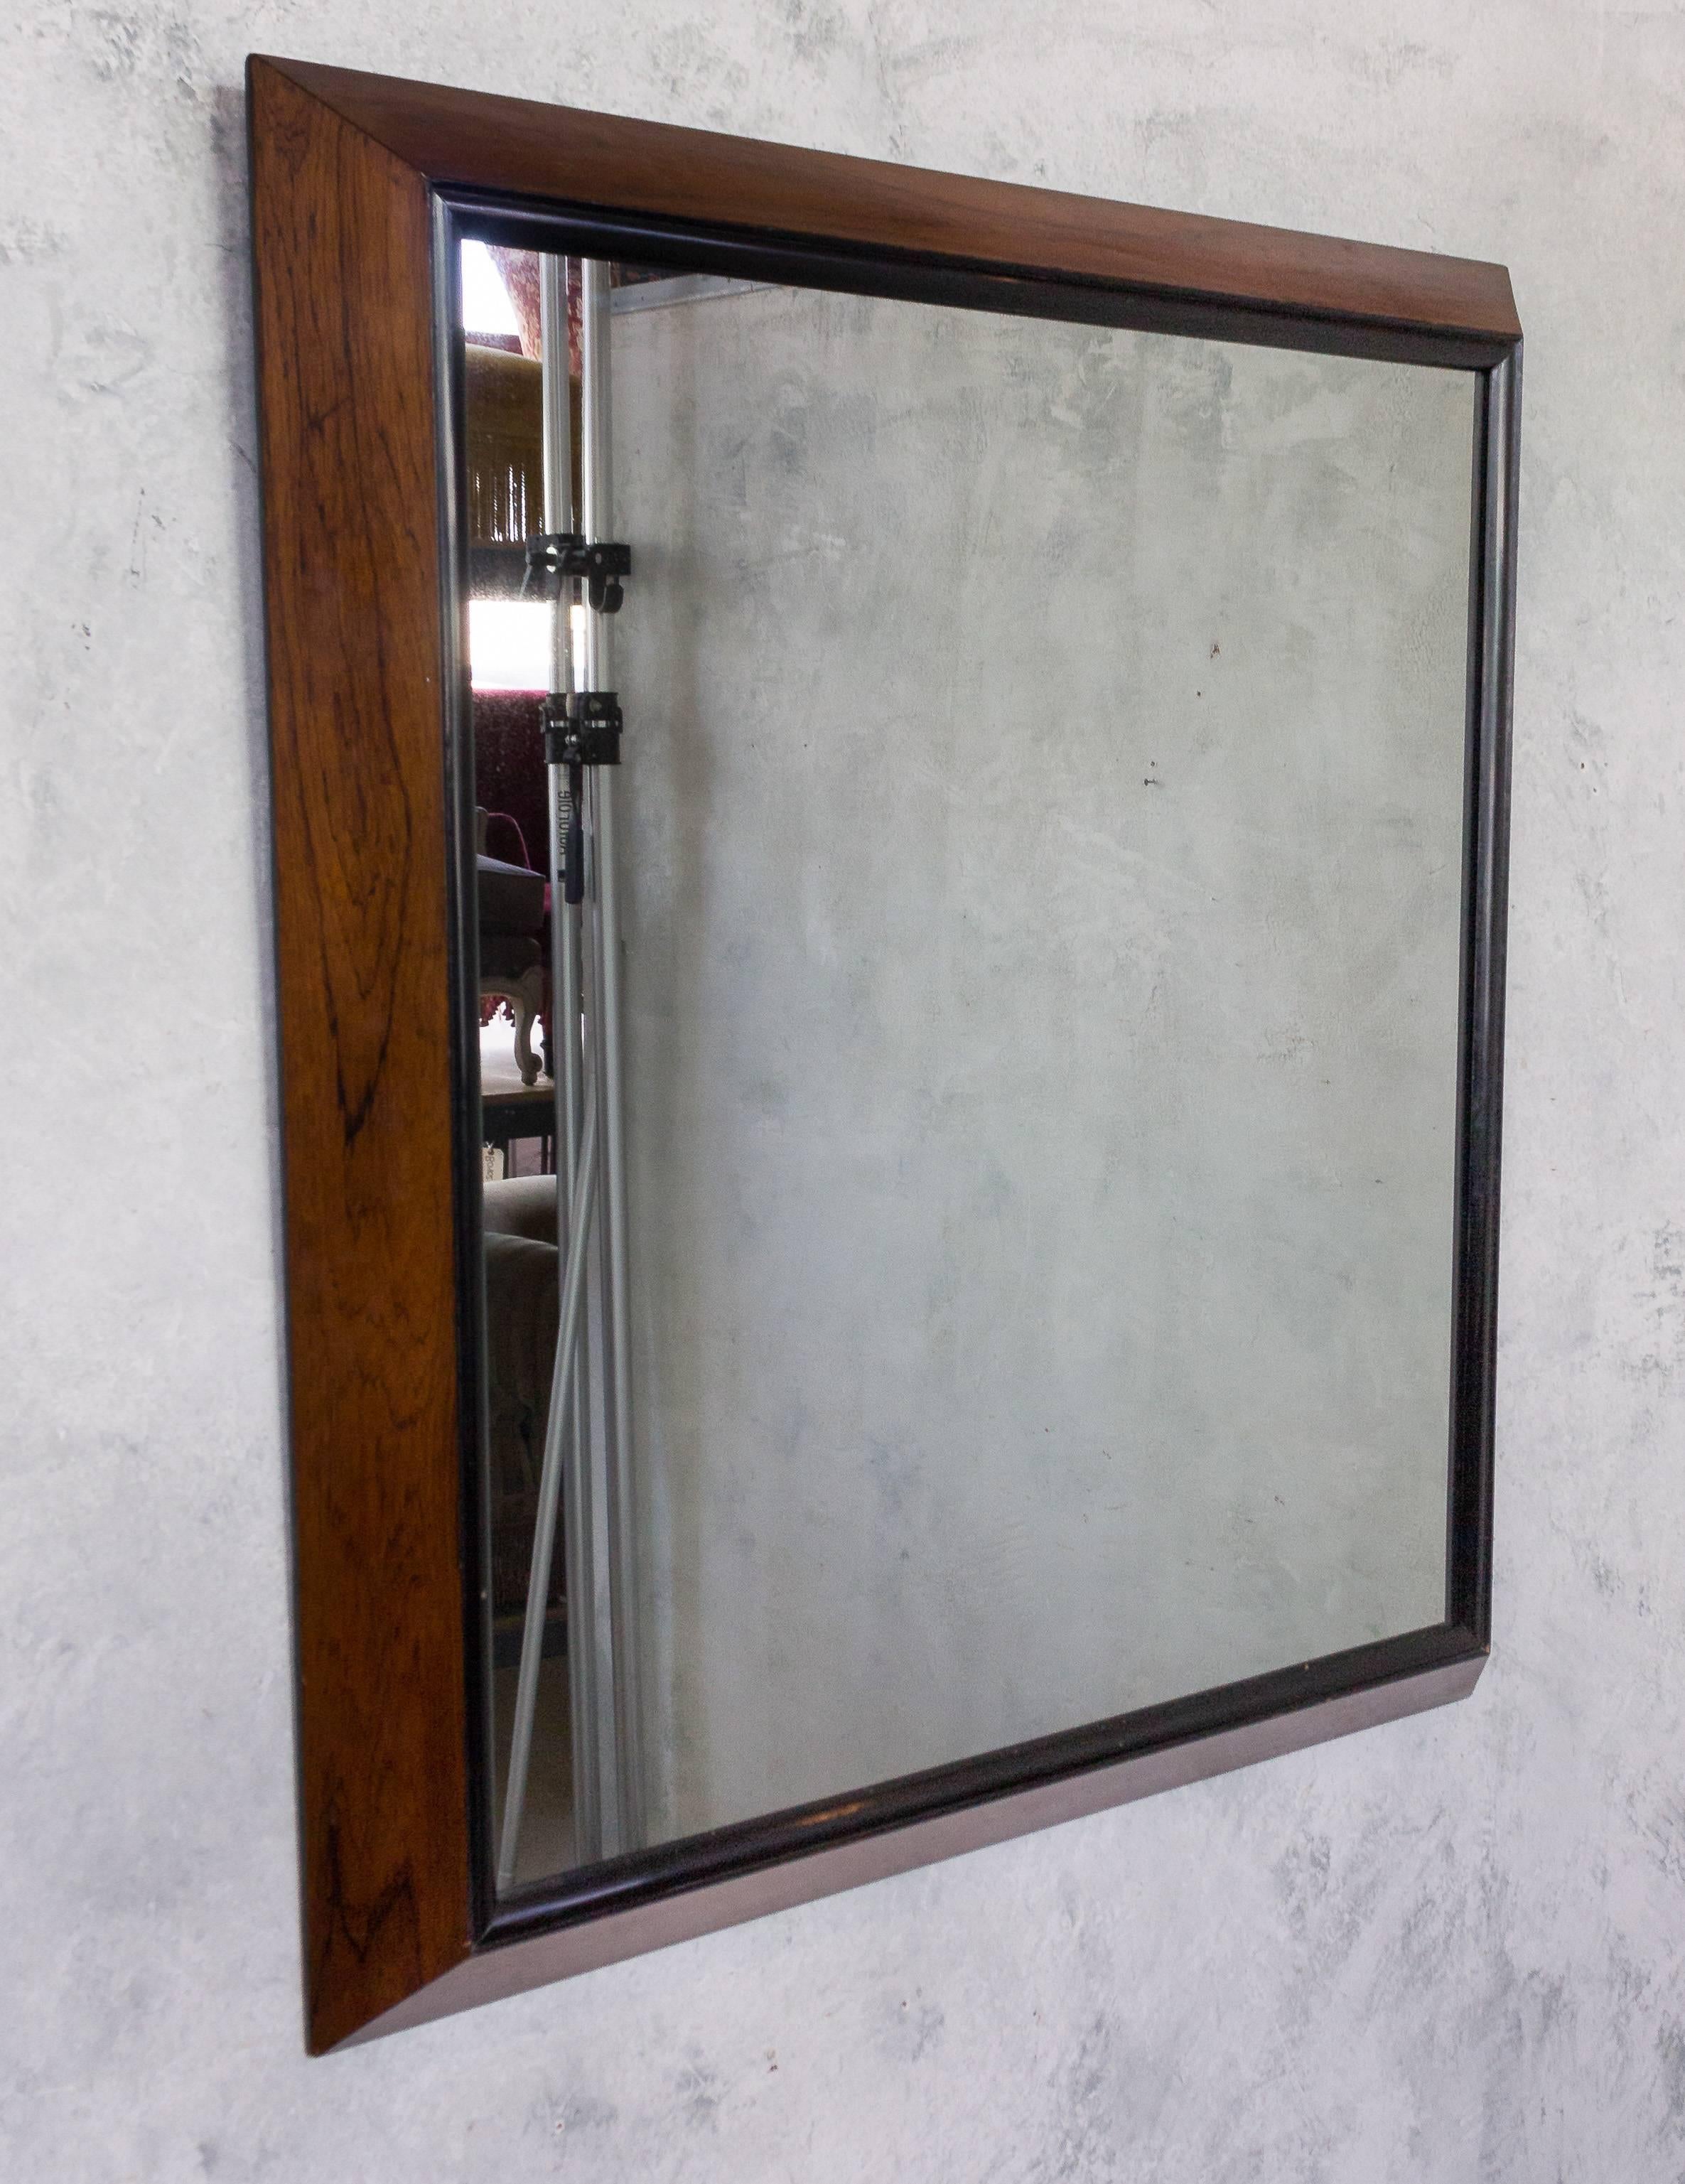 Large rosewood framed mirror with ebonized trim.